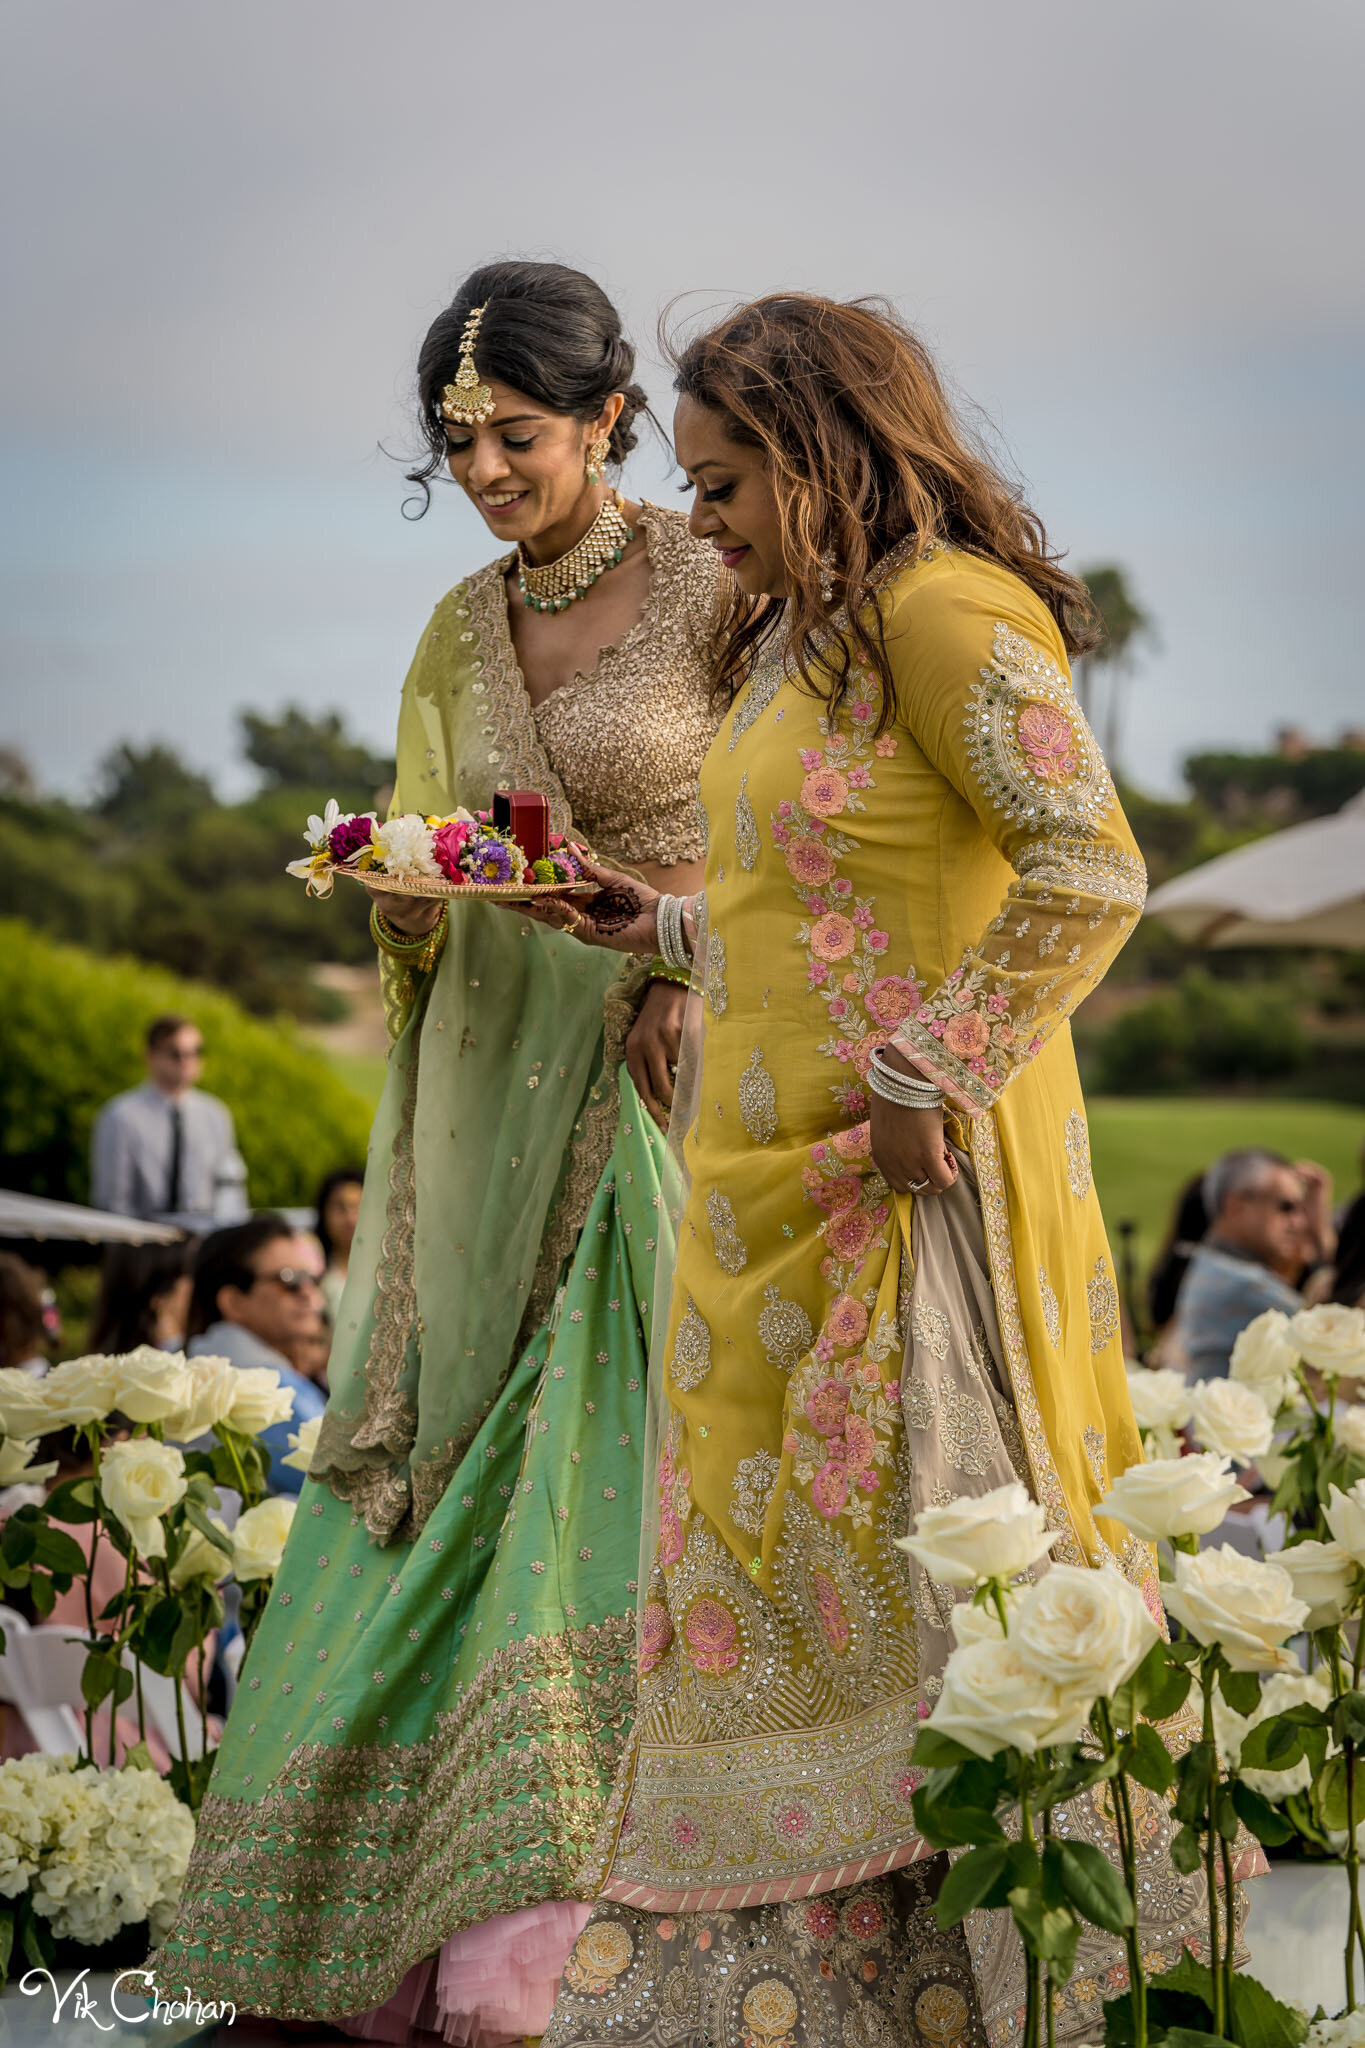 2021-07-30-Shaan-&-Megha-Wedding-Vik-Chohan-Photography-Photo-Booth-Social-Media-VCP-356.jpg